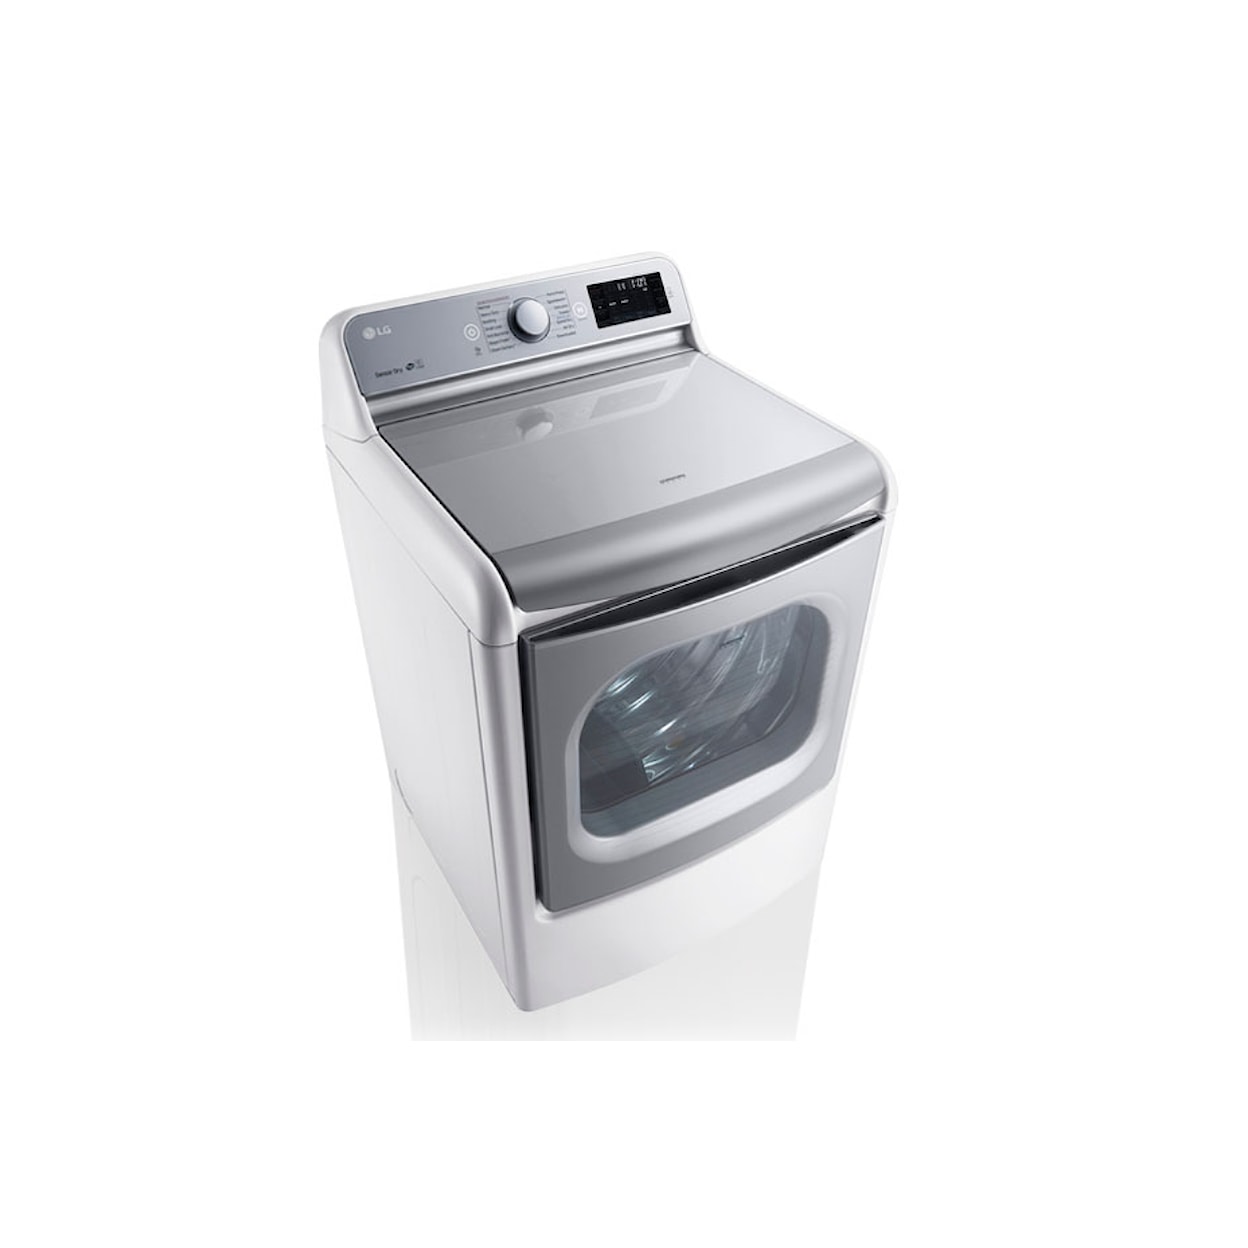 LG Appliances Dryers 9.0 Cu. Ft. Capacity Gas Steam Dryer